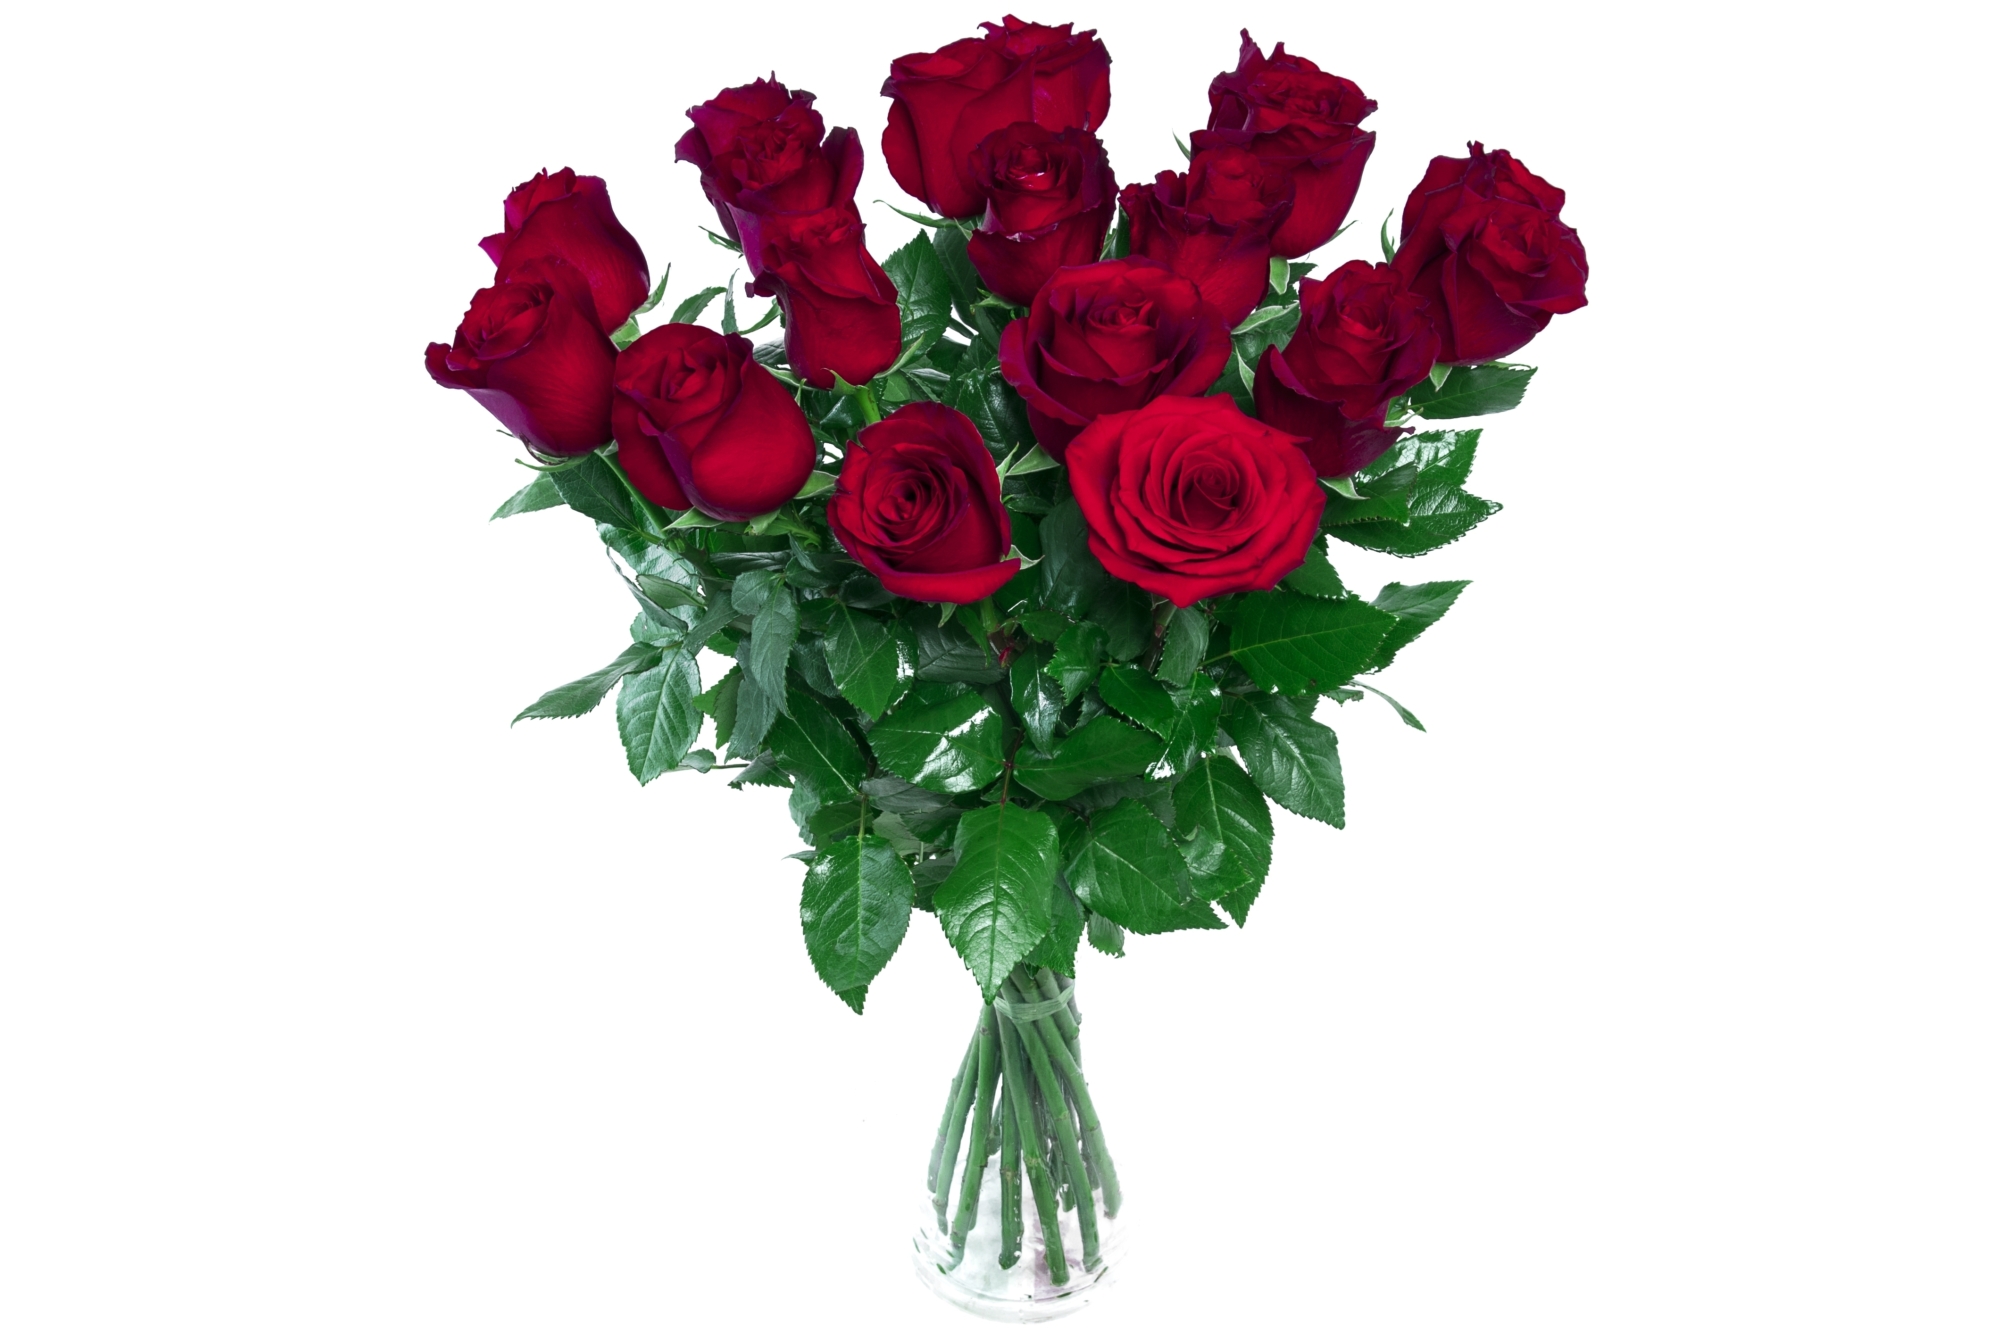 Roses rouges Saint Valentin - Botanica Brussels